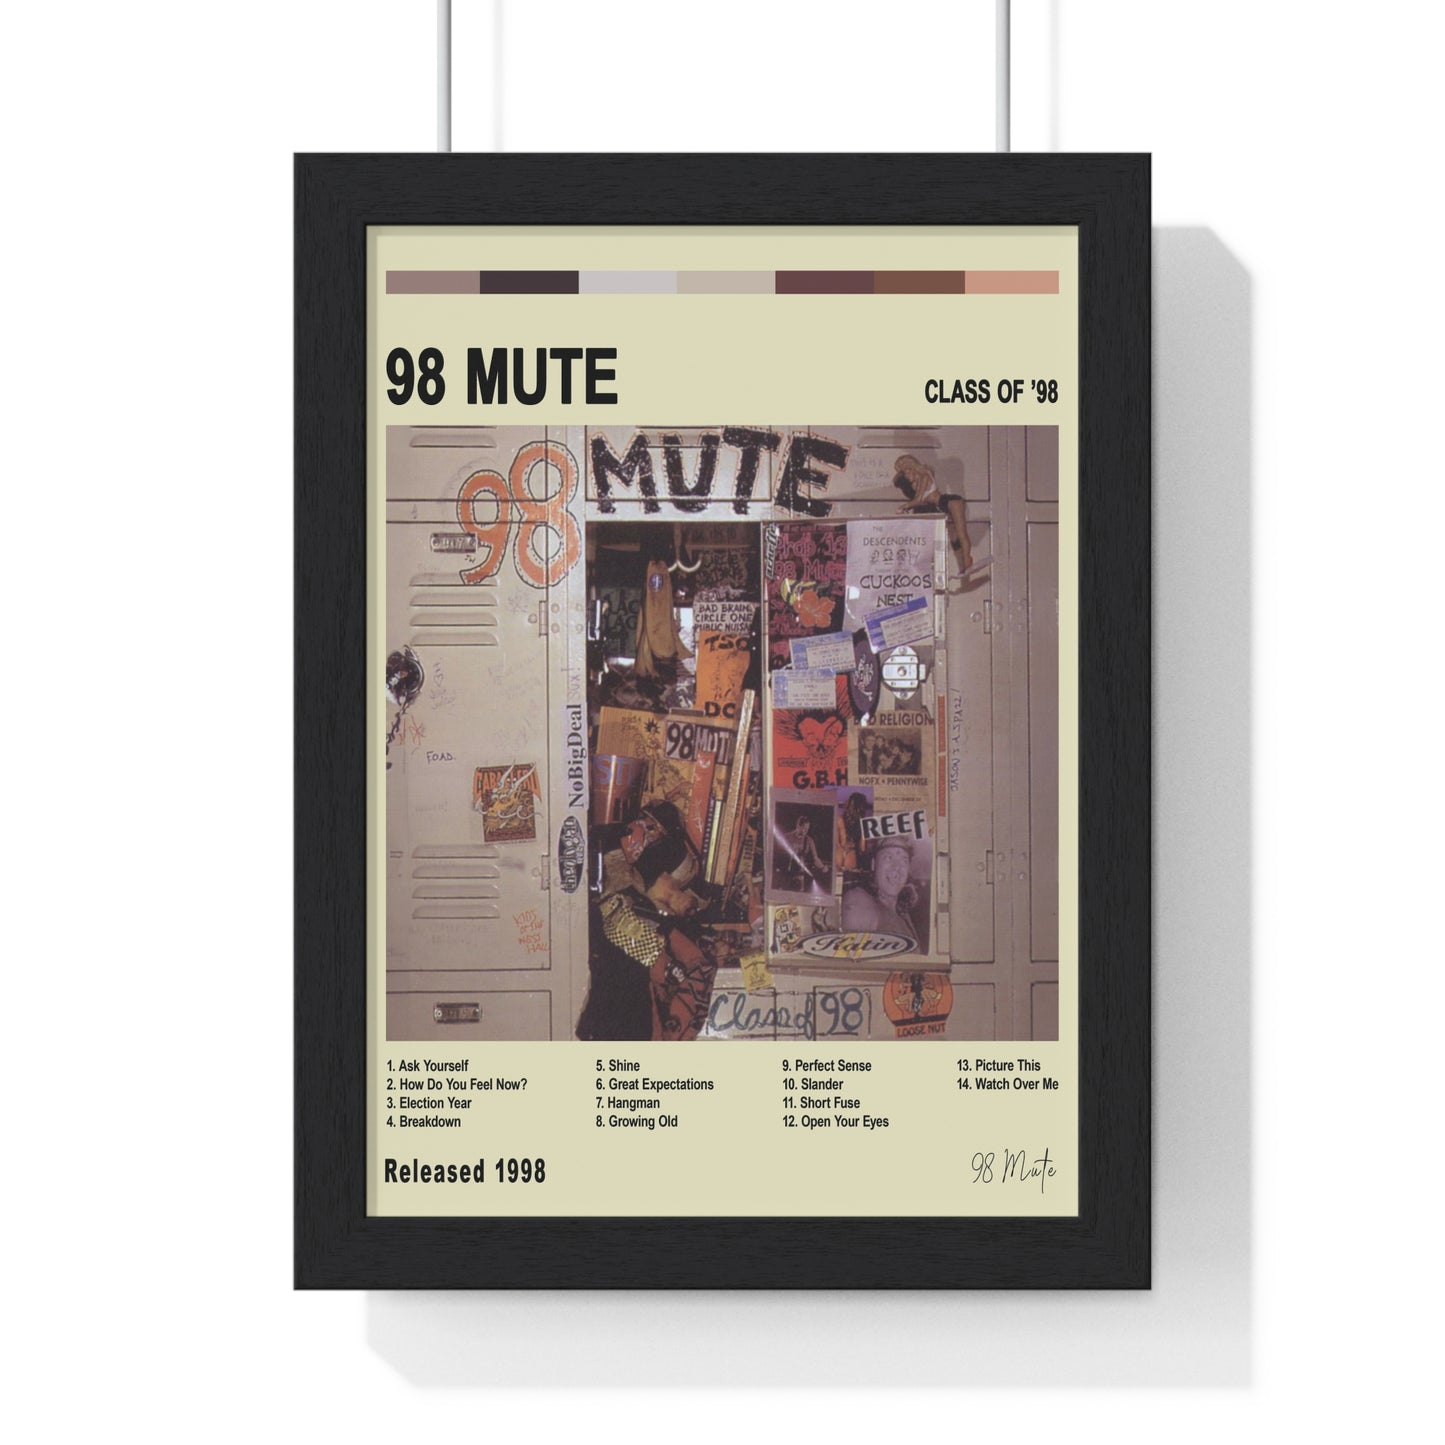 98 Mute - Class of '98 Album Poster